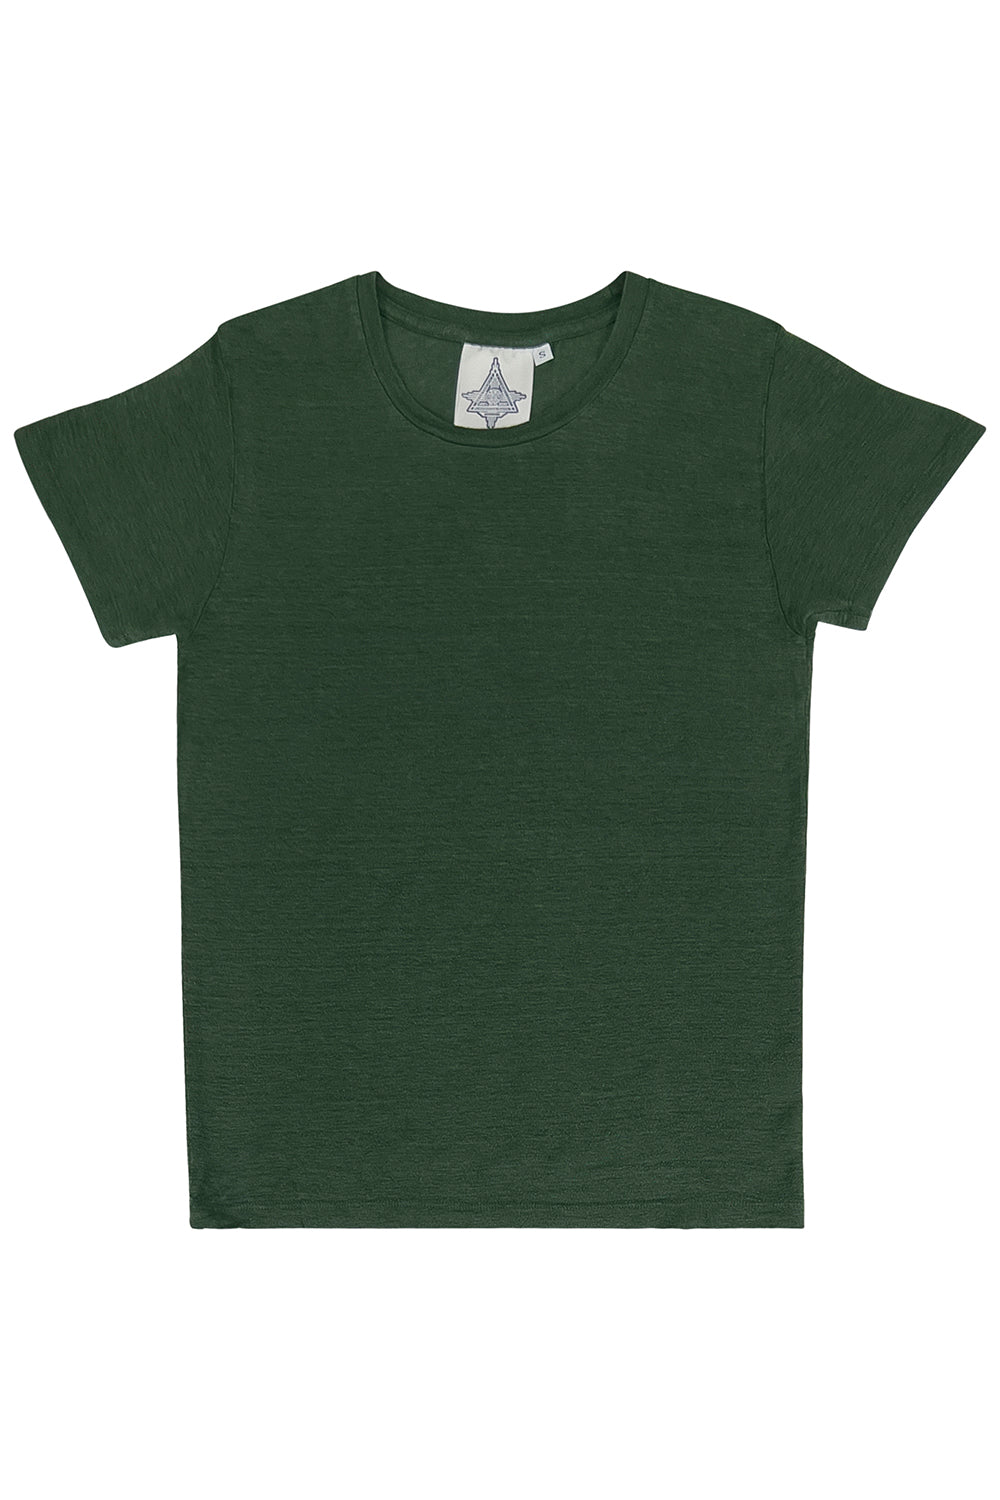 Madison 100% Hemp Tee | Jungmaven Hemp Clothing & Accessories / Color: Hunter Green